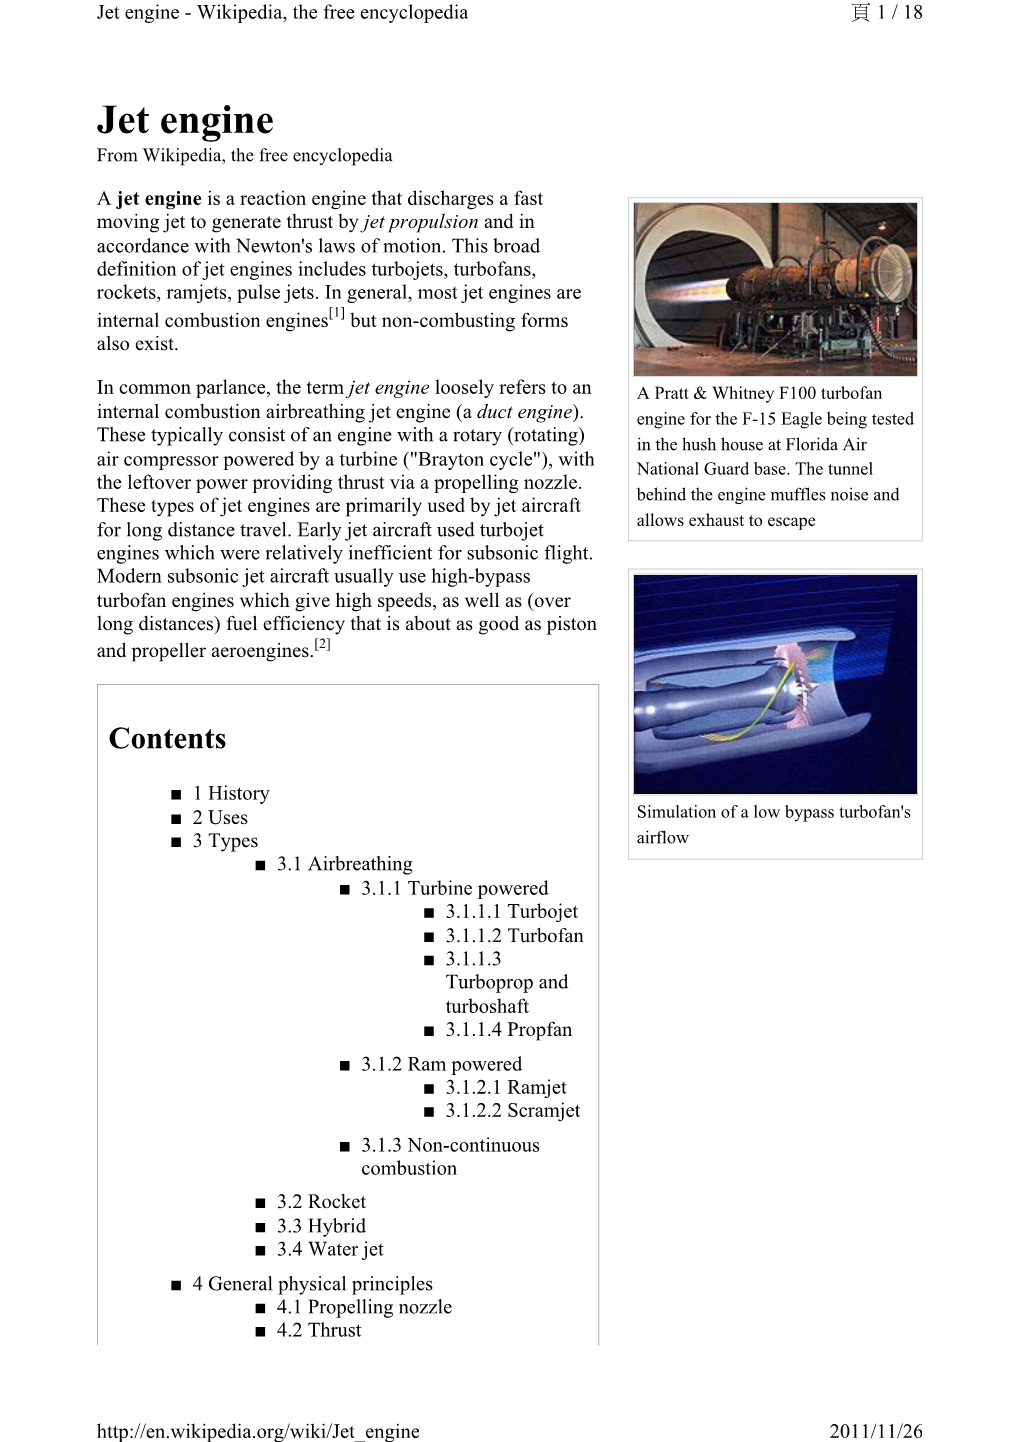 Jet Engine - Wikipedia, the Free Encyclopedia 頁 1 / 18